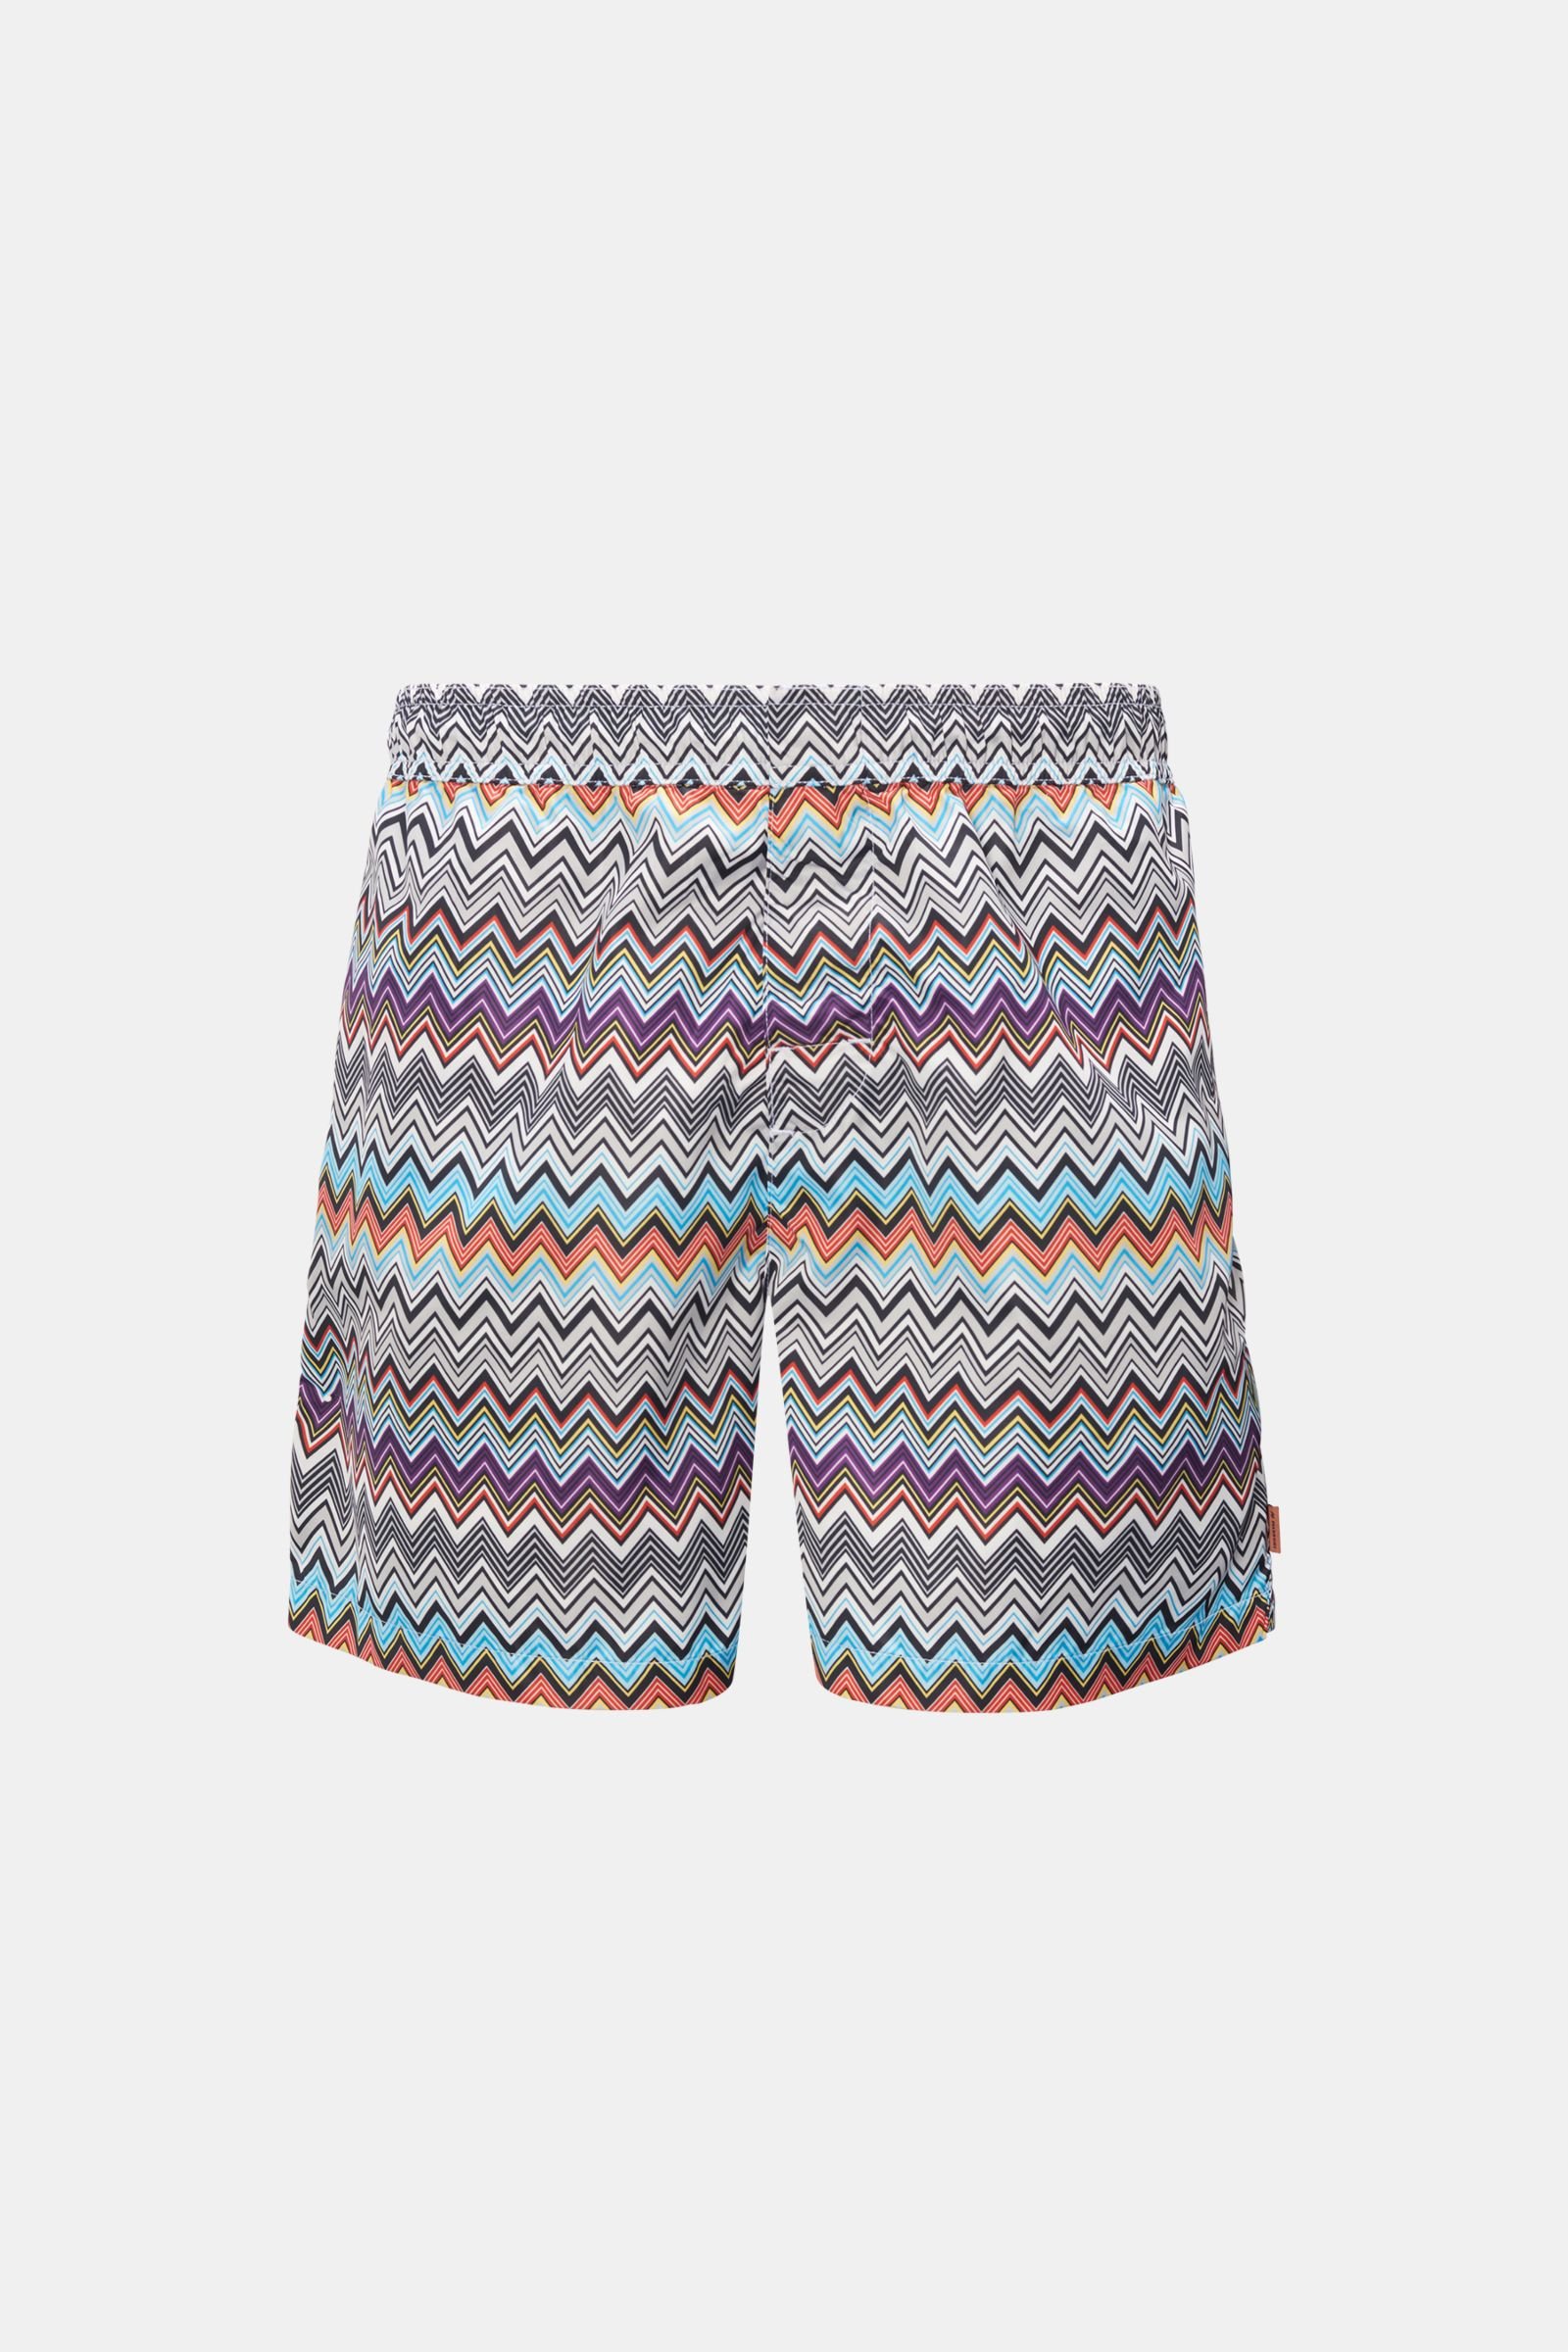 Swim shorts light blue/red/grey patterned